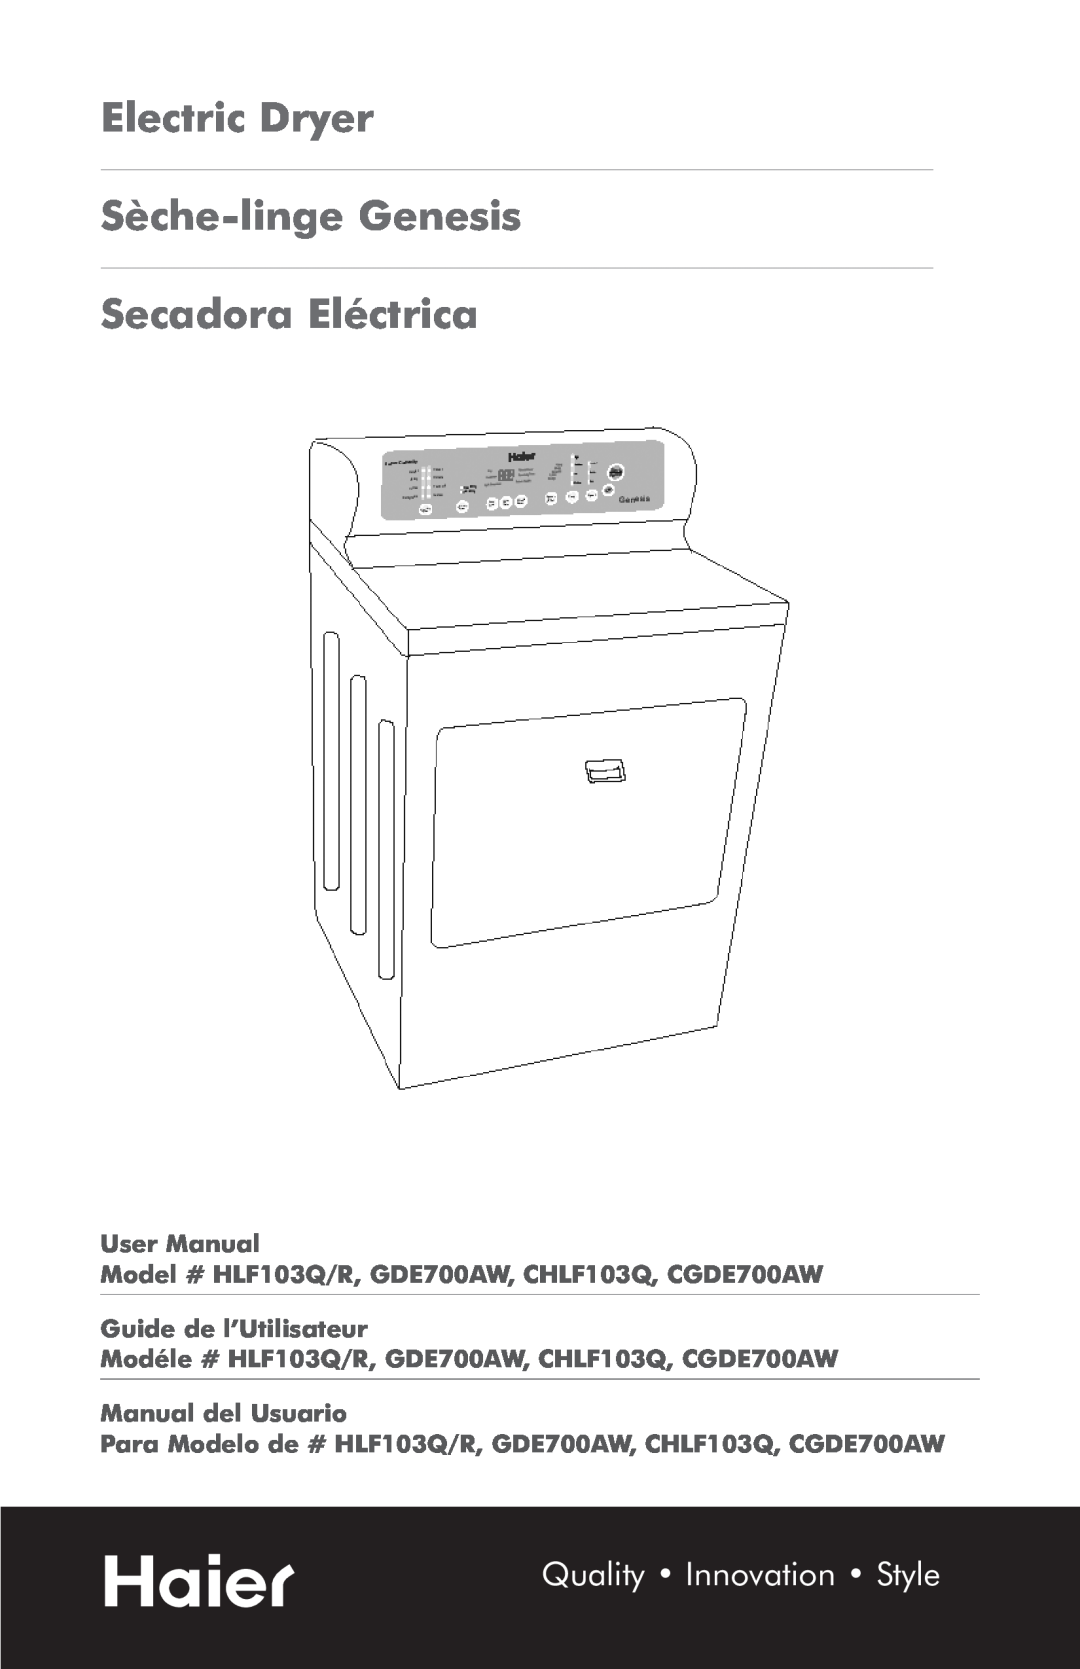 Haier GDE700AW, HLF103Q/R user manual Electric Dryer Sèche-linge Genesis Secadora Eléctrica, Quality Innovation Style 